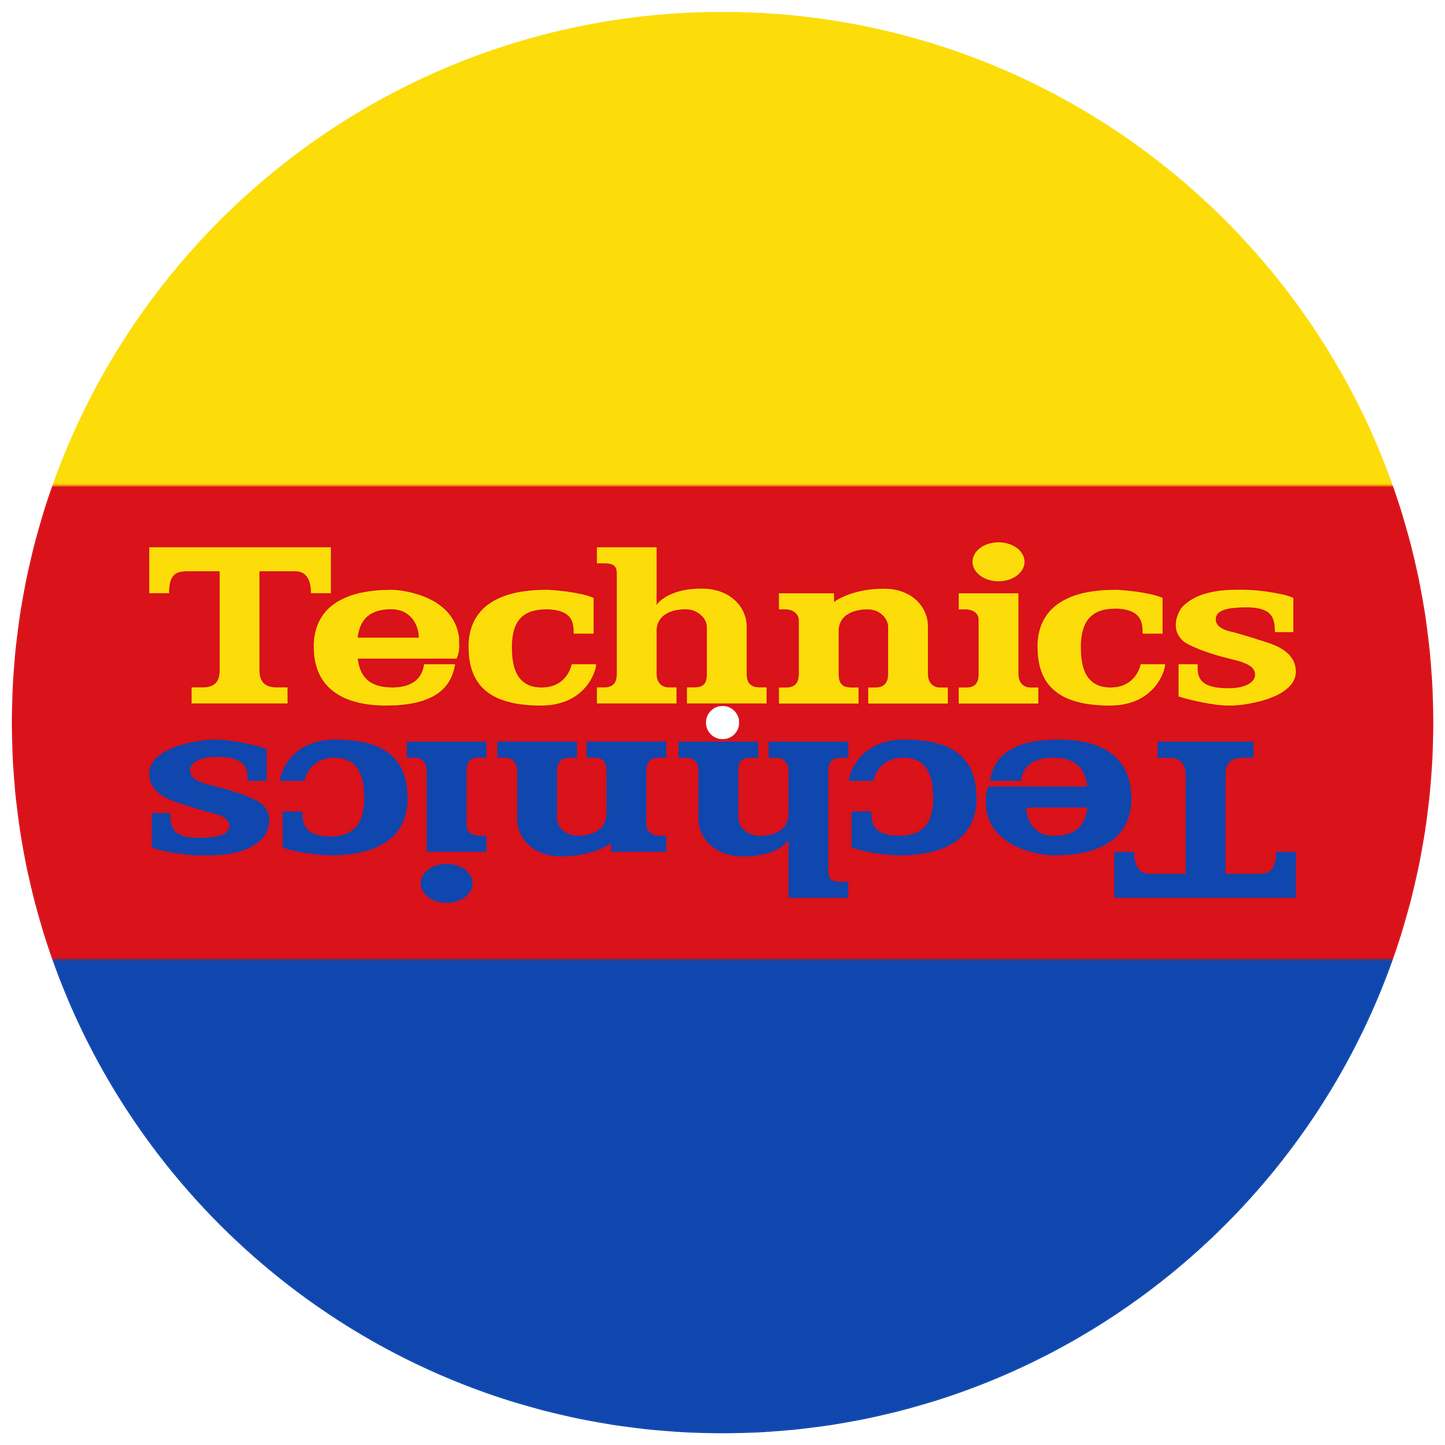 Technics x Noord-Holland slipmat